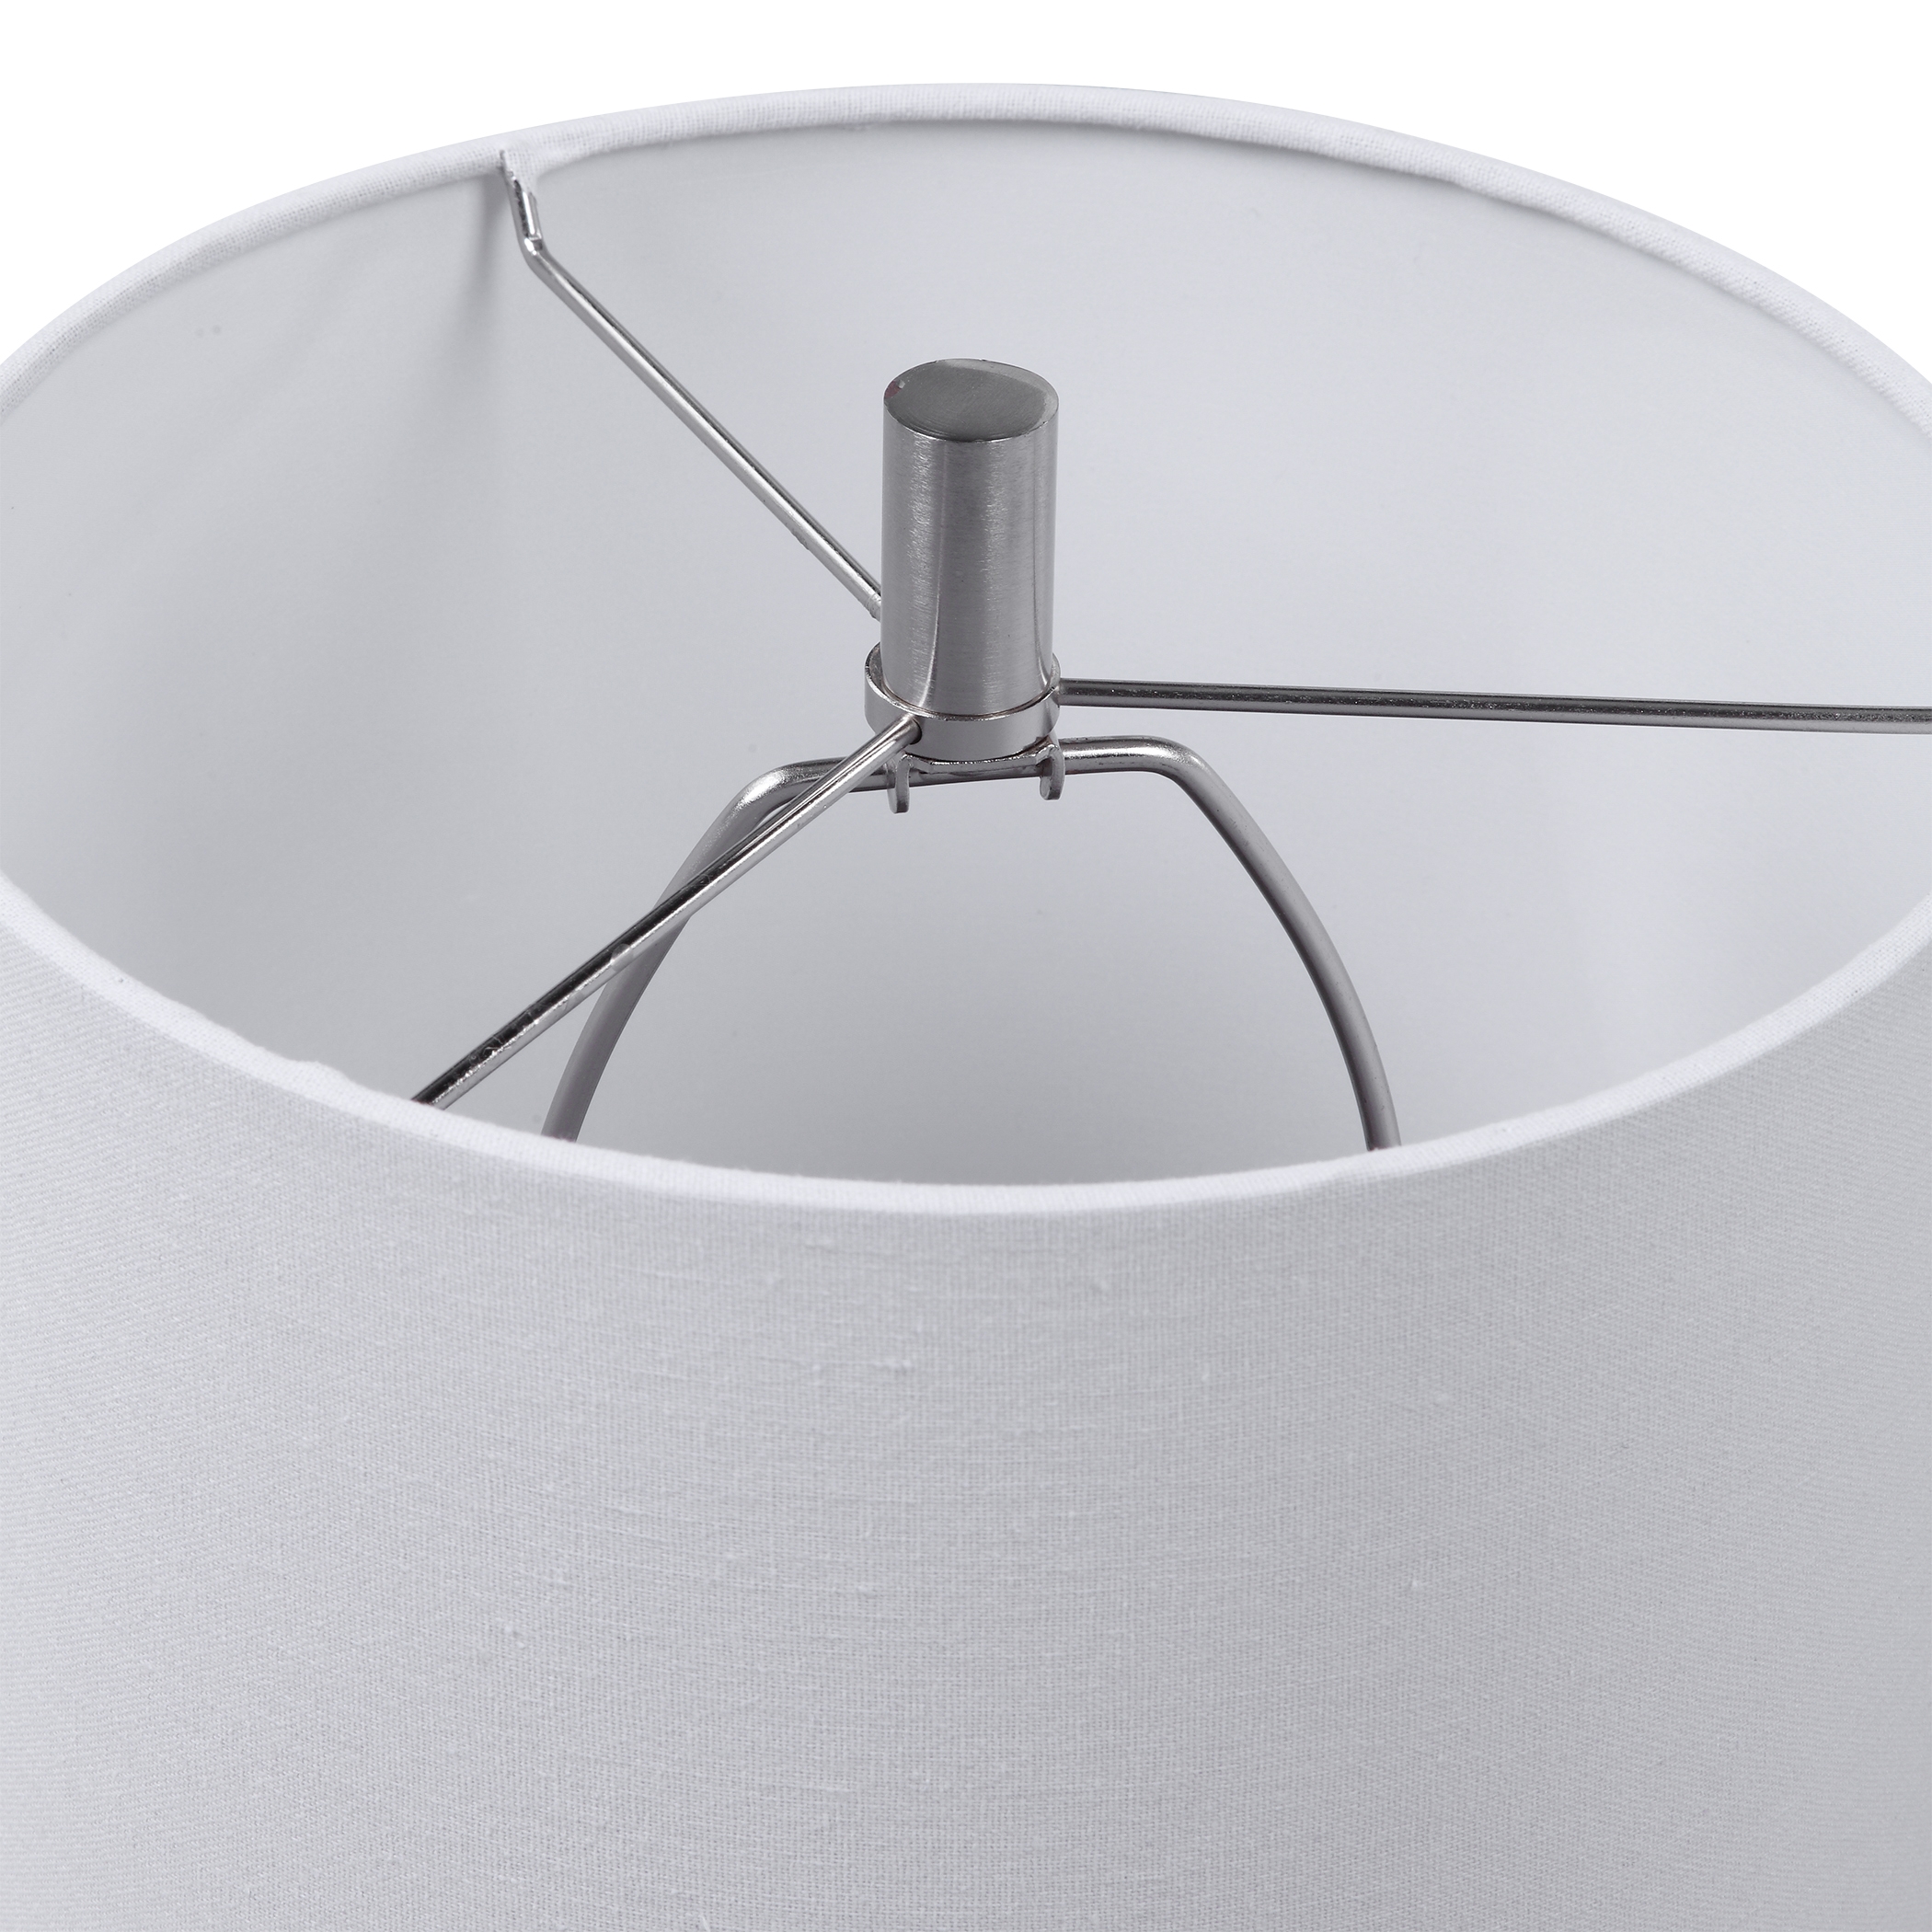 Rayas White Table Lamp NO LONGER AVAIL - Image 3